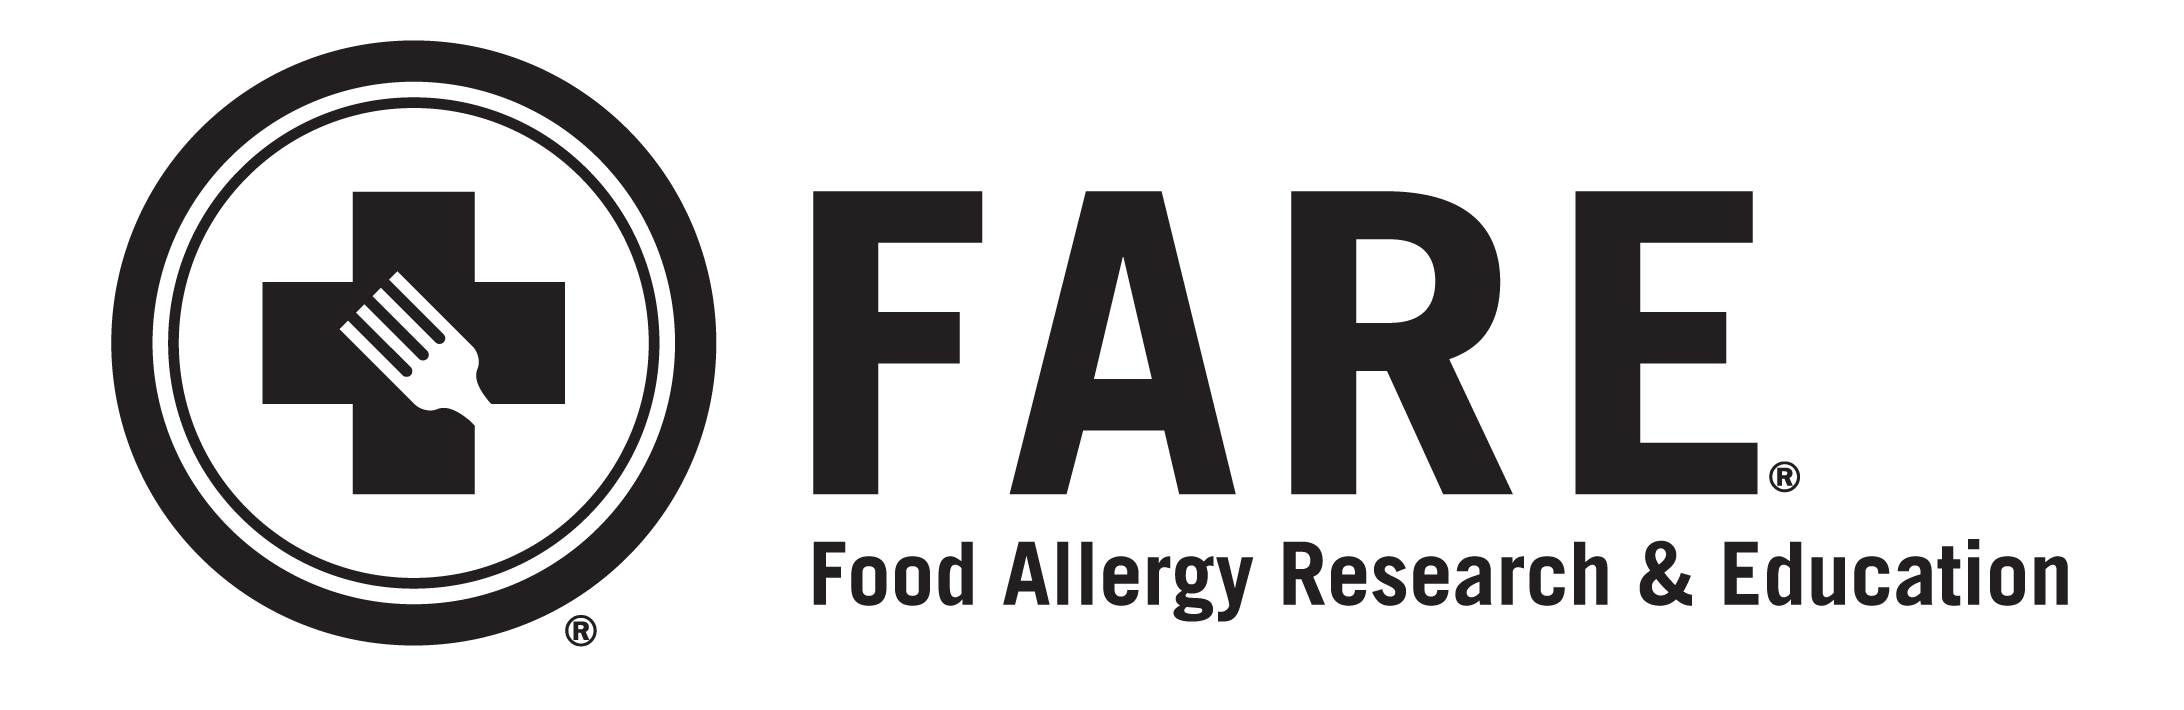 FARE - Food Allergy Research & Educationr